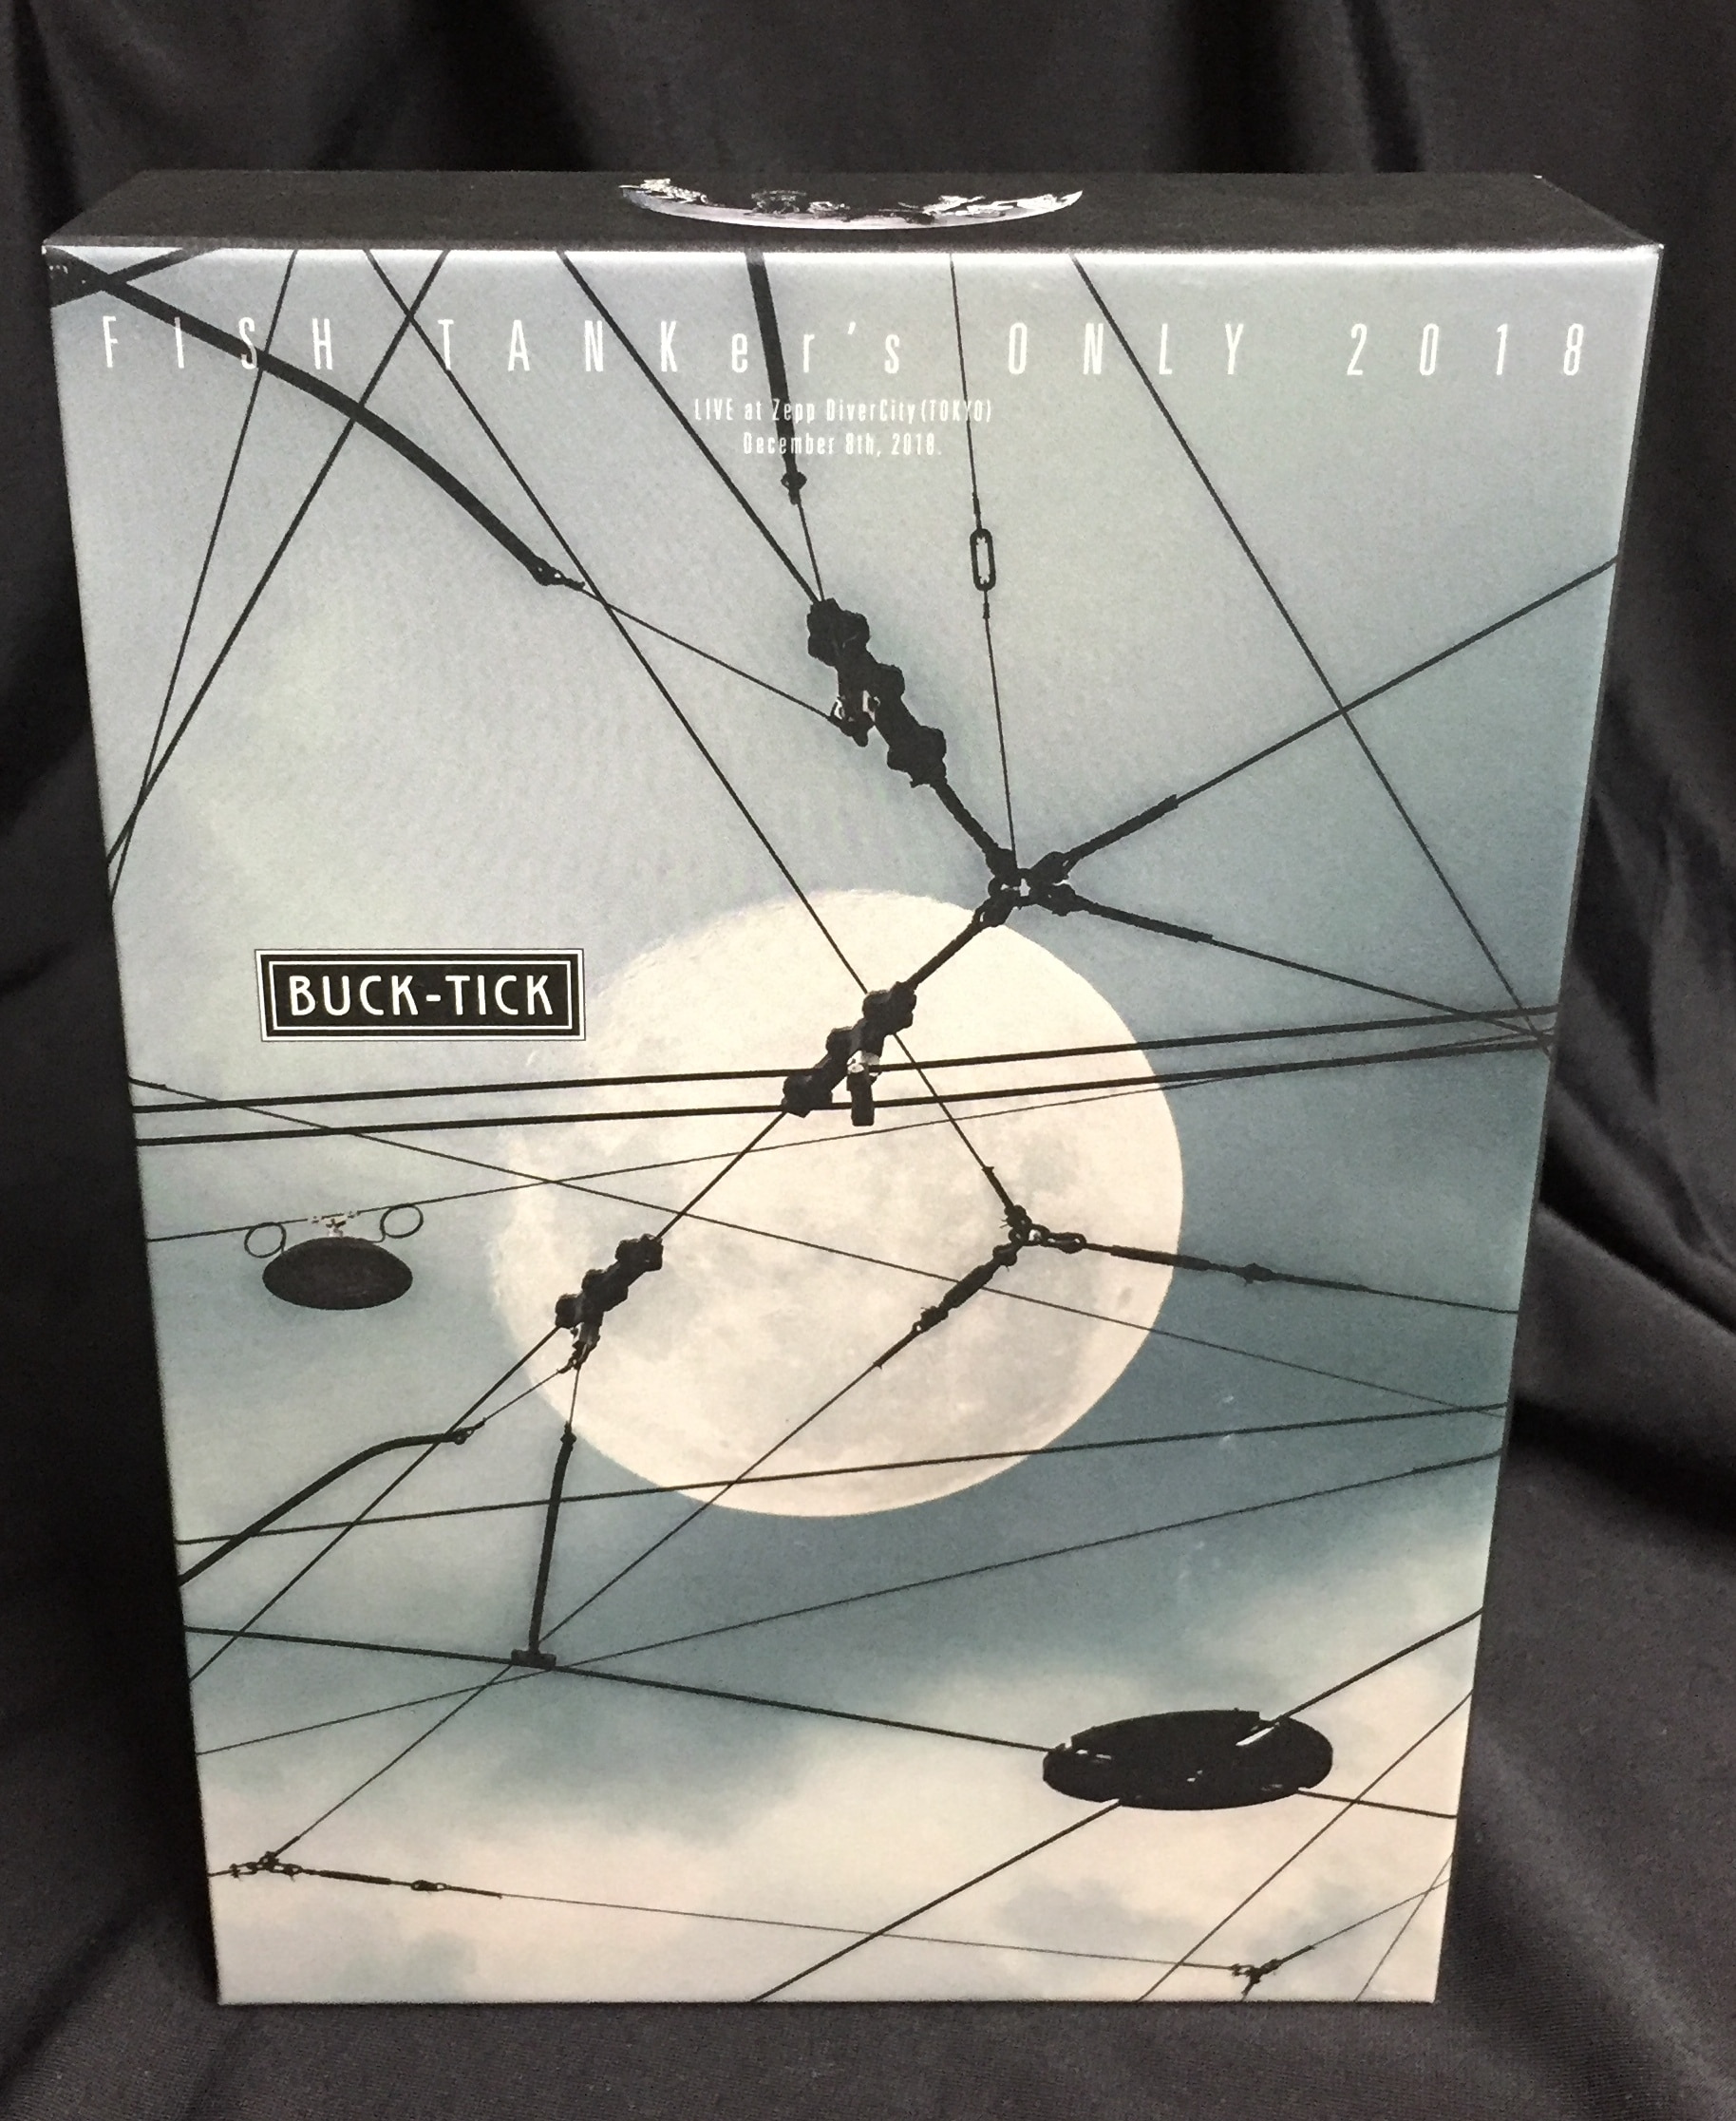 BUCK-TICK 完全予約限定盤(2Blu-ray+2CD) FISH TANKer's ONLY 2018